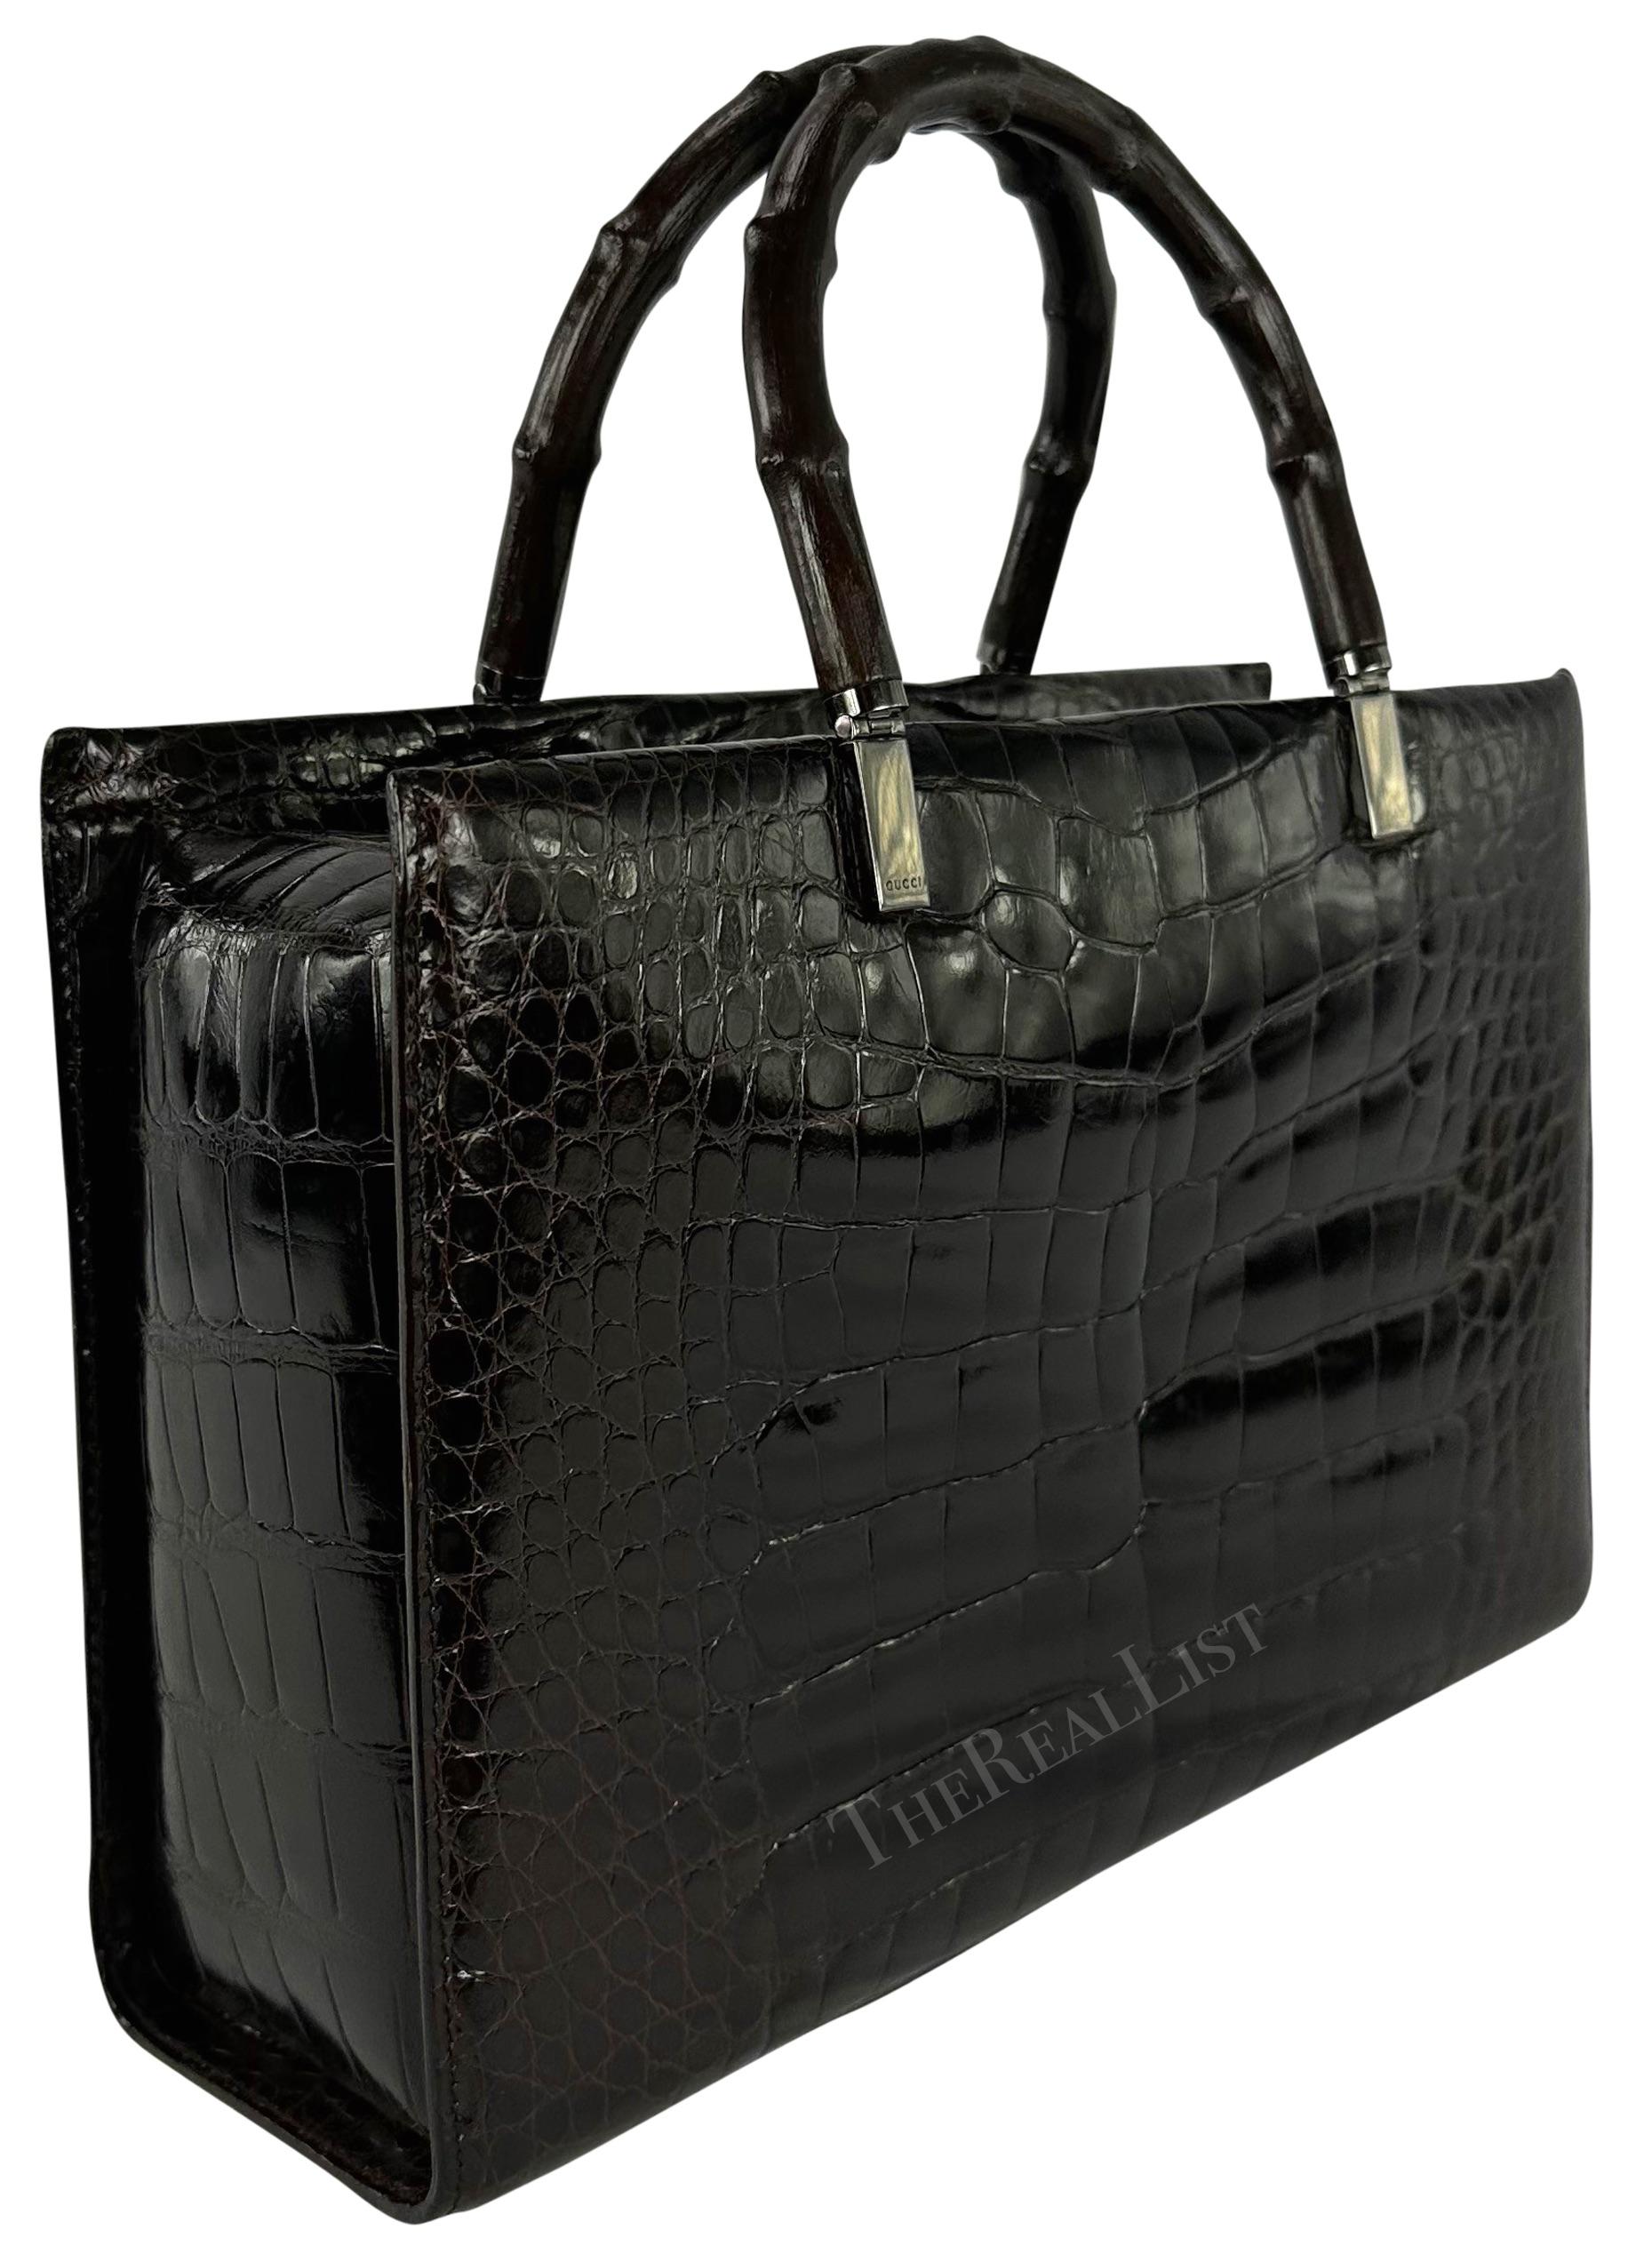 F/W 1998 Gucci by Tom Ford Ad Campaign Black Crocodile Bamboo Tote Bag  For Sale 8